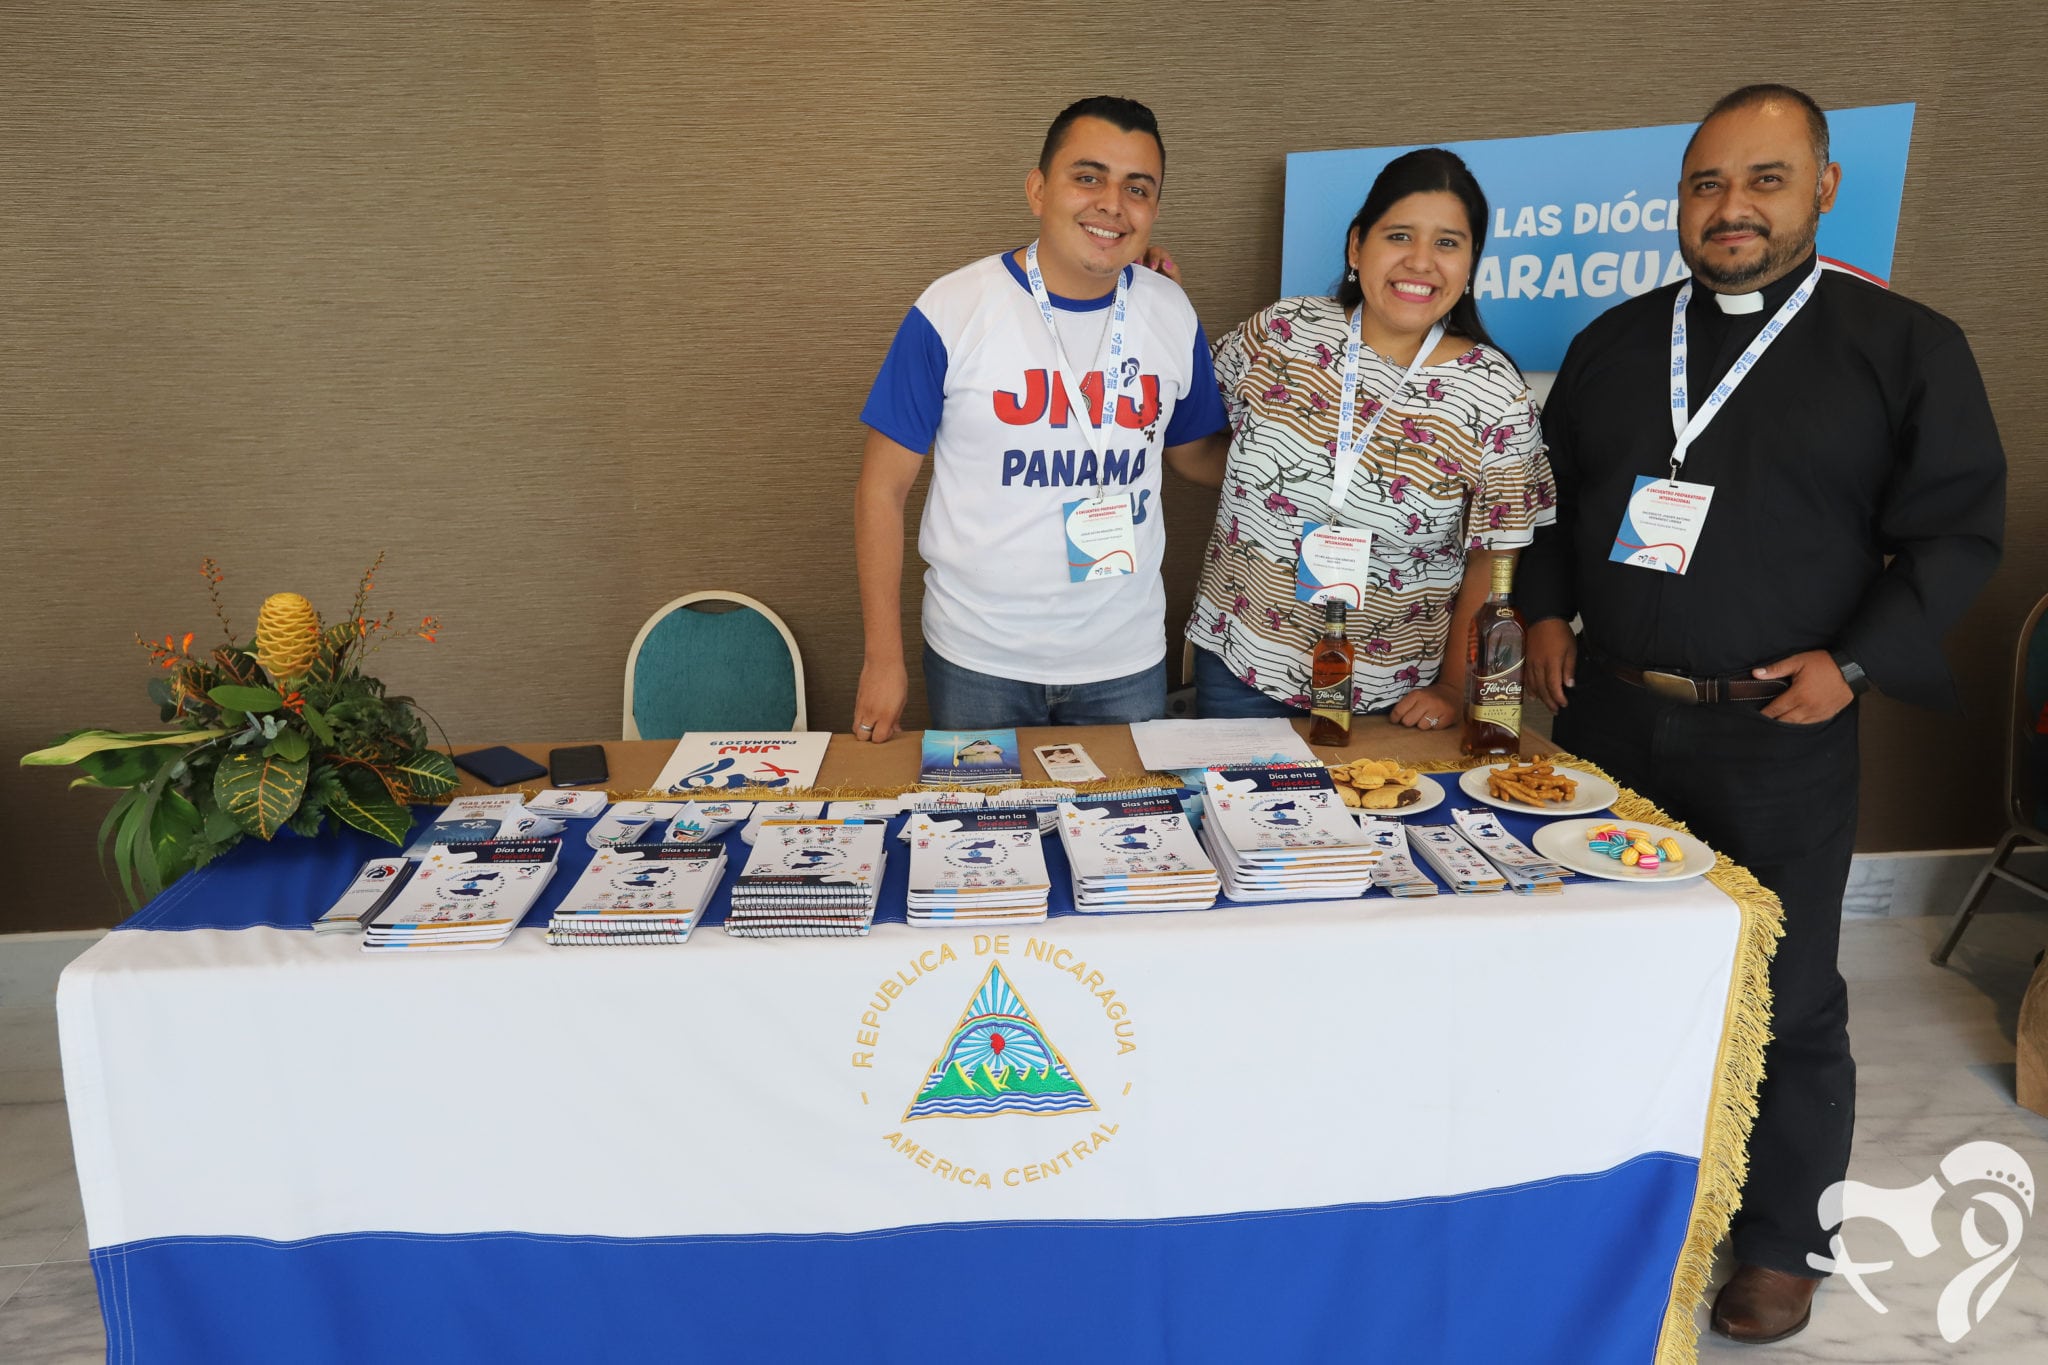 La JMJ Panamá 2019 será una jornada latinoamericana